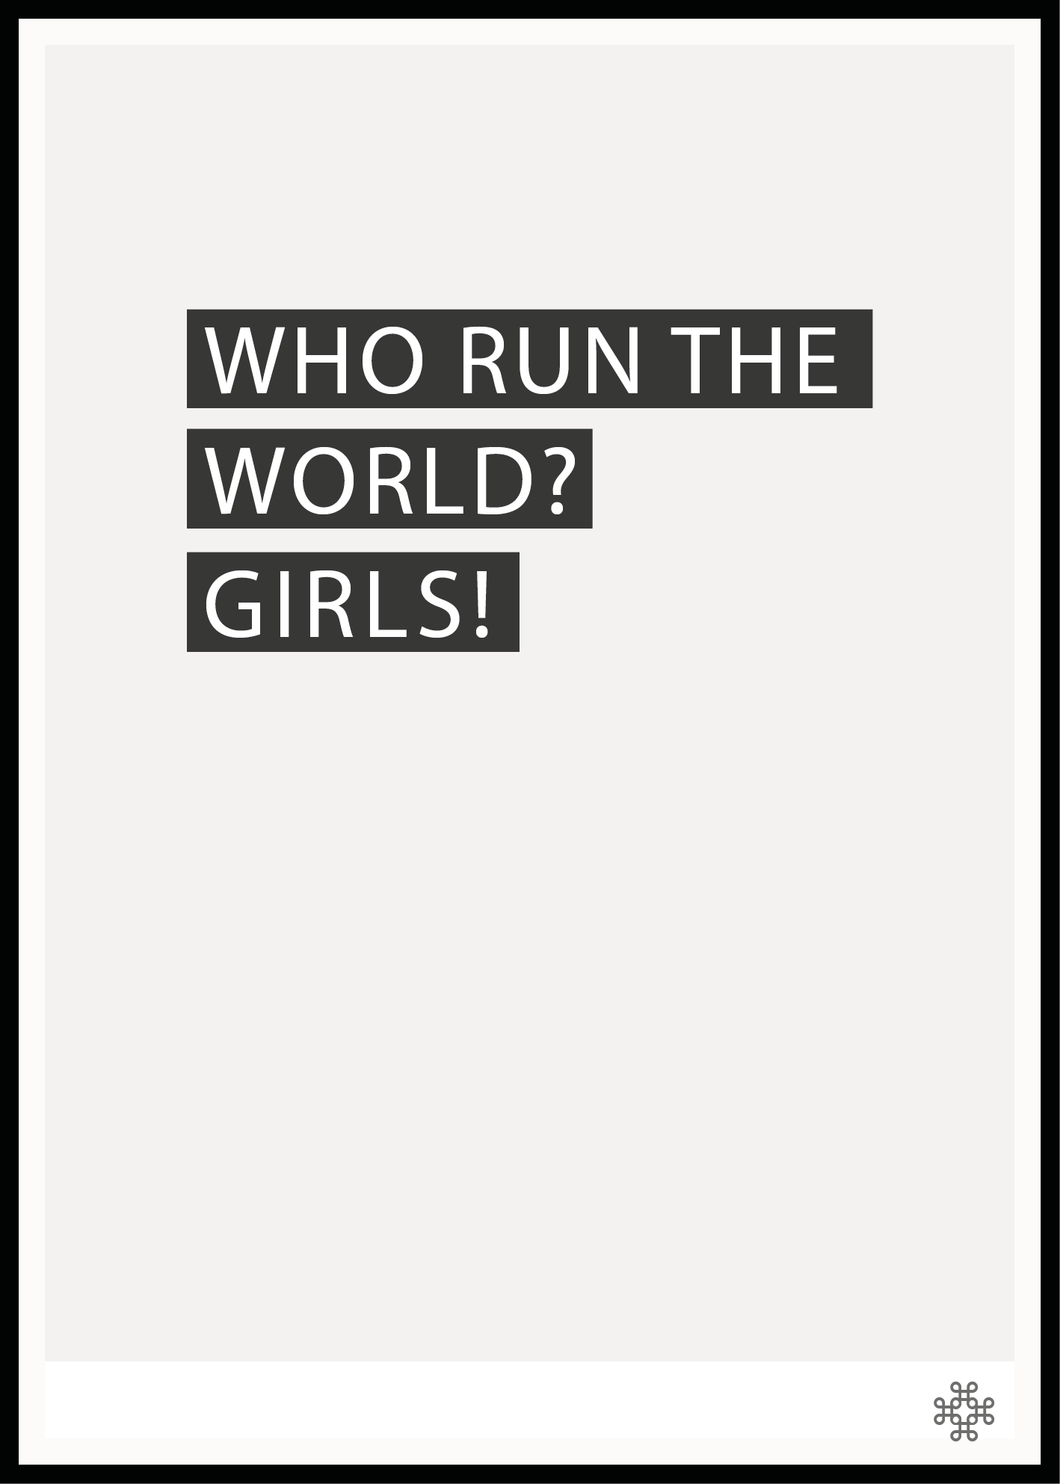 Who run the world? Girls